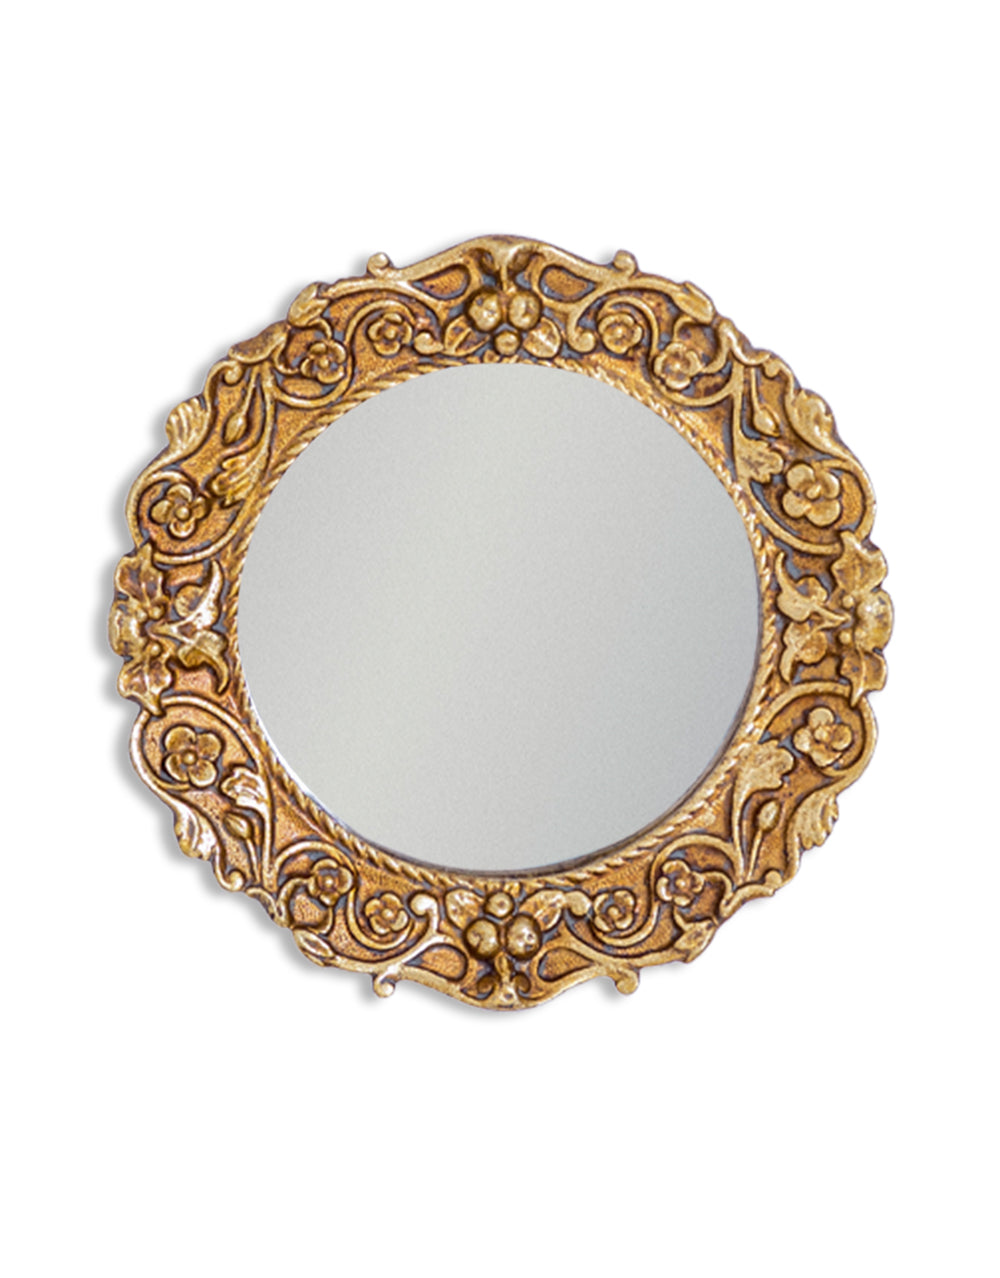 Antique Gold Ornate Mirror